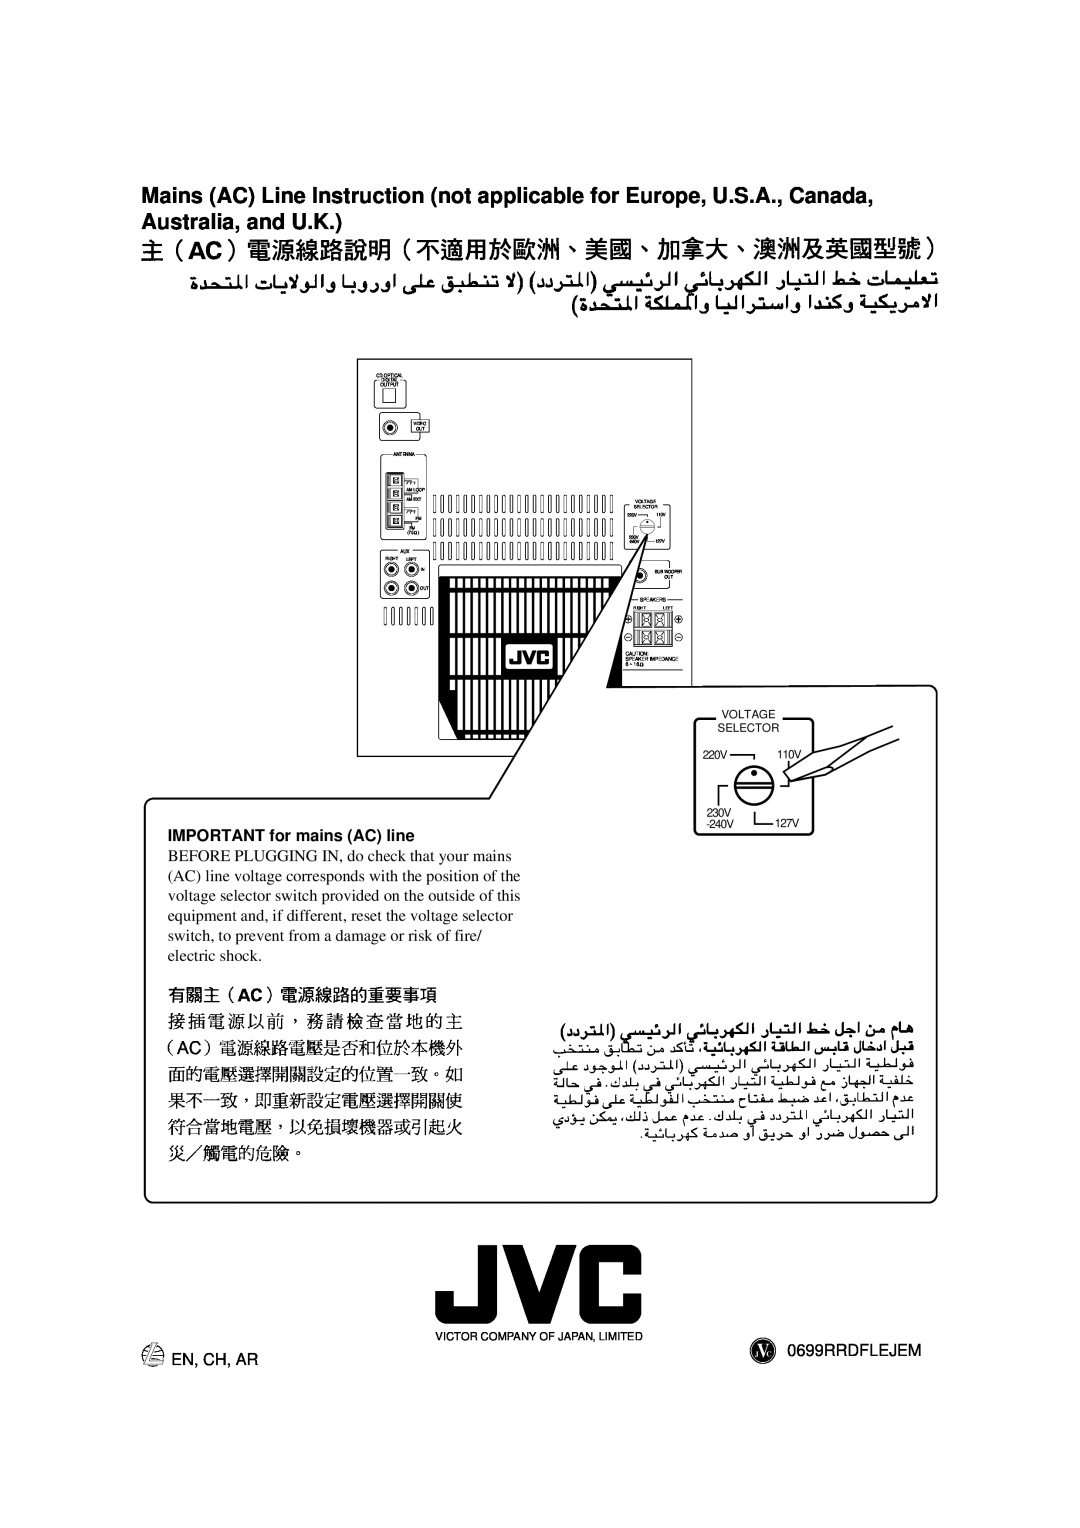 JVC MX-J555V, MX-J585V manual IMPORTANT for mains AC line, En, Ch, Ar, JVC 0699RRDFLEJEM 